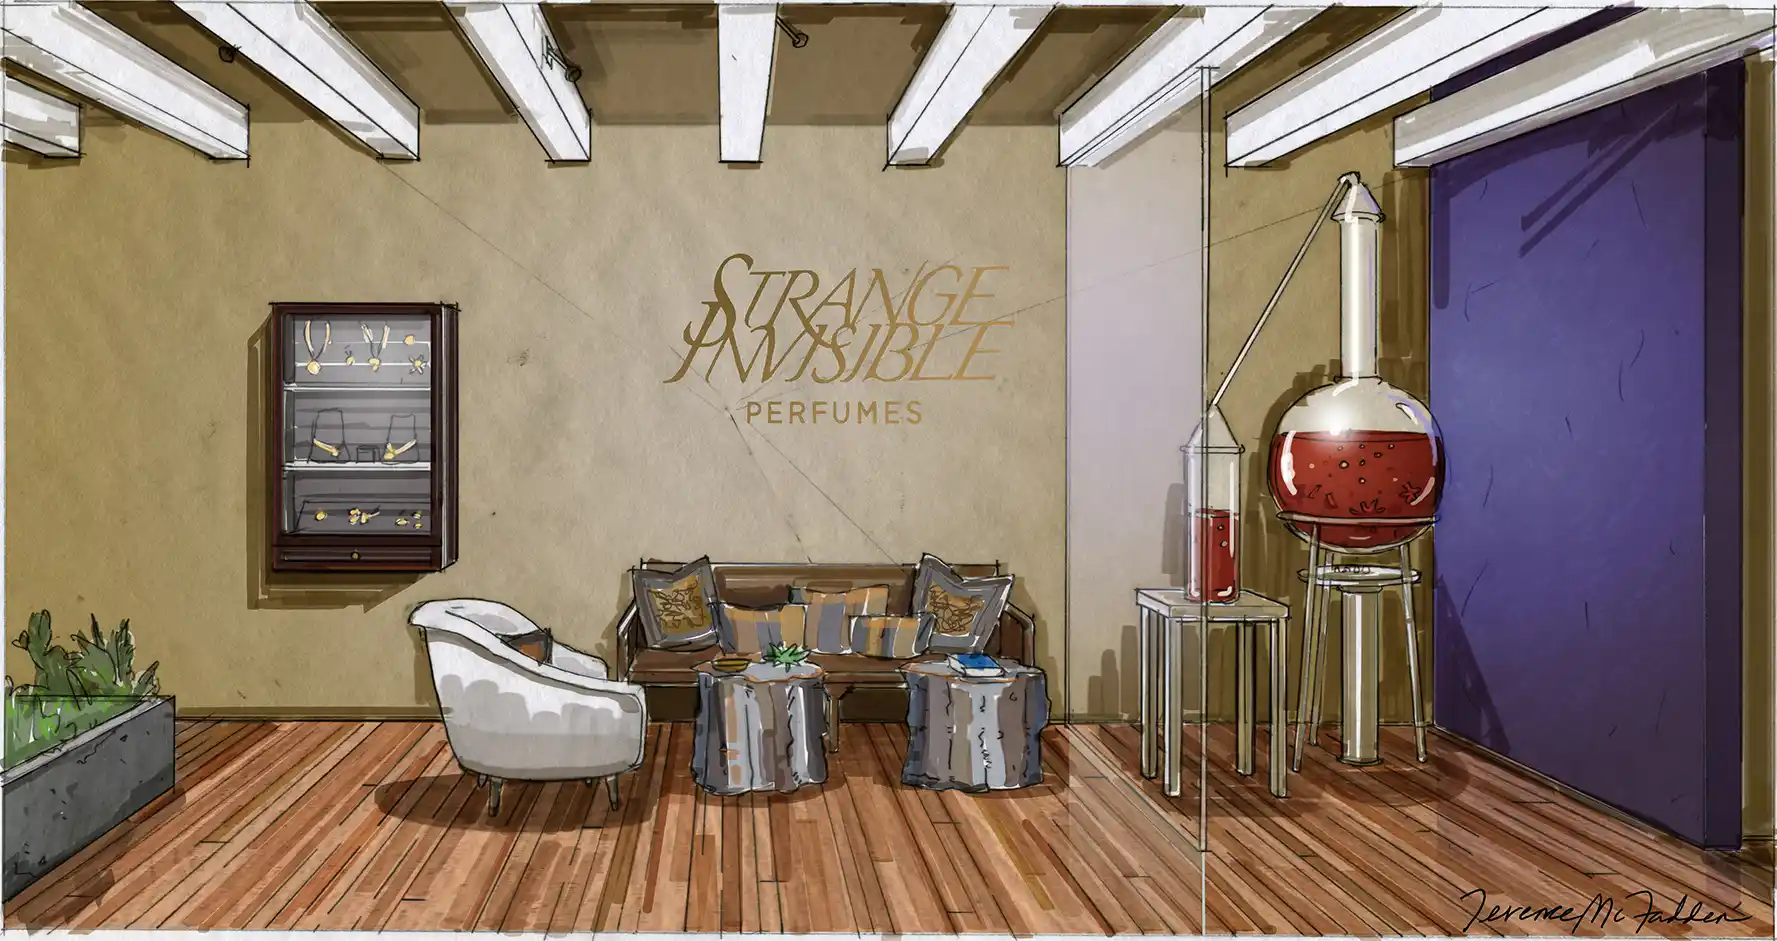 Interior design presentation rendering for a boutique perfume store.